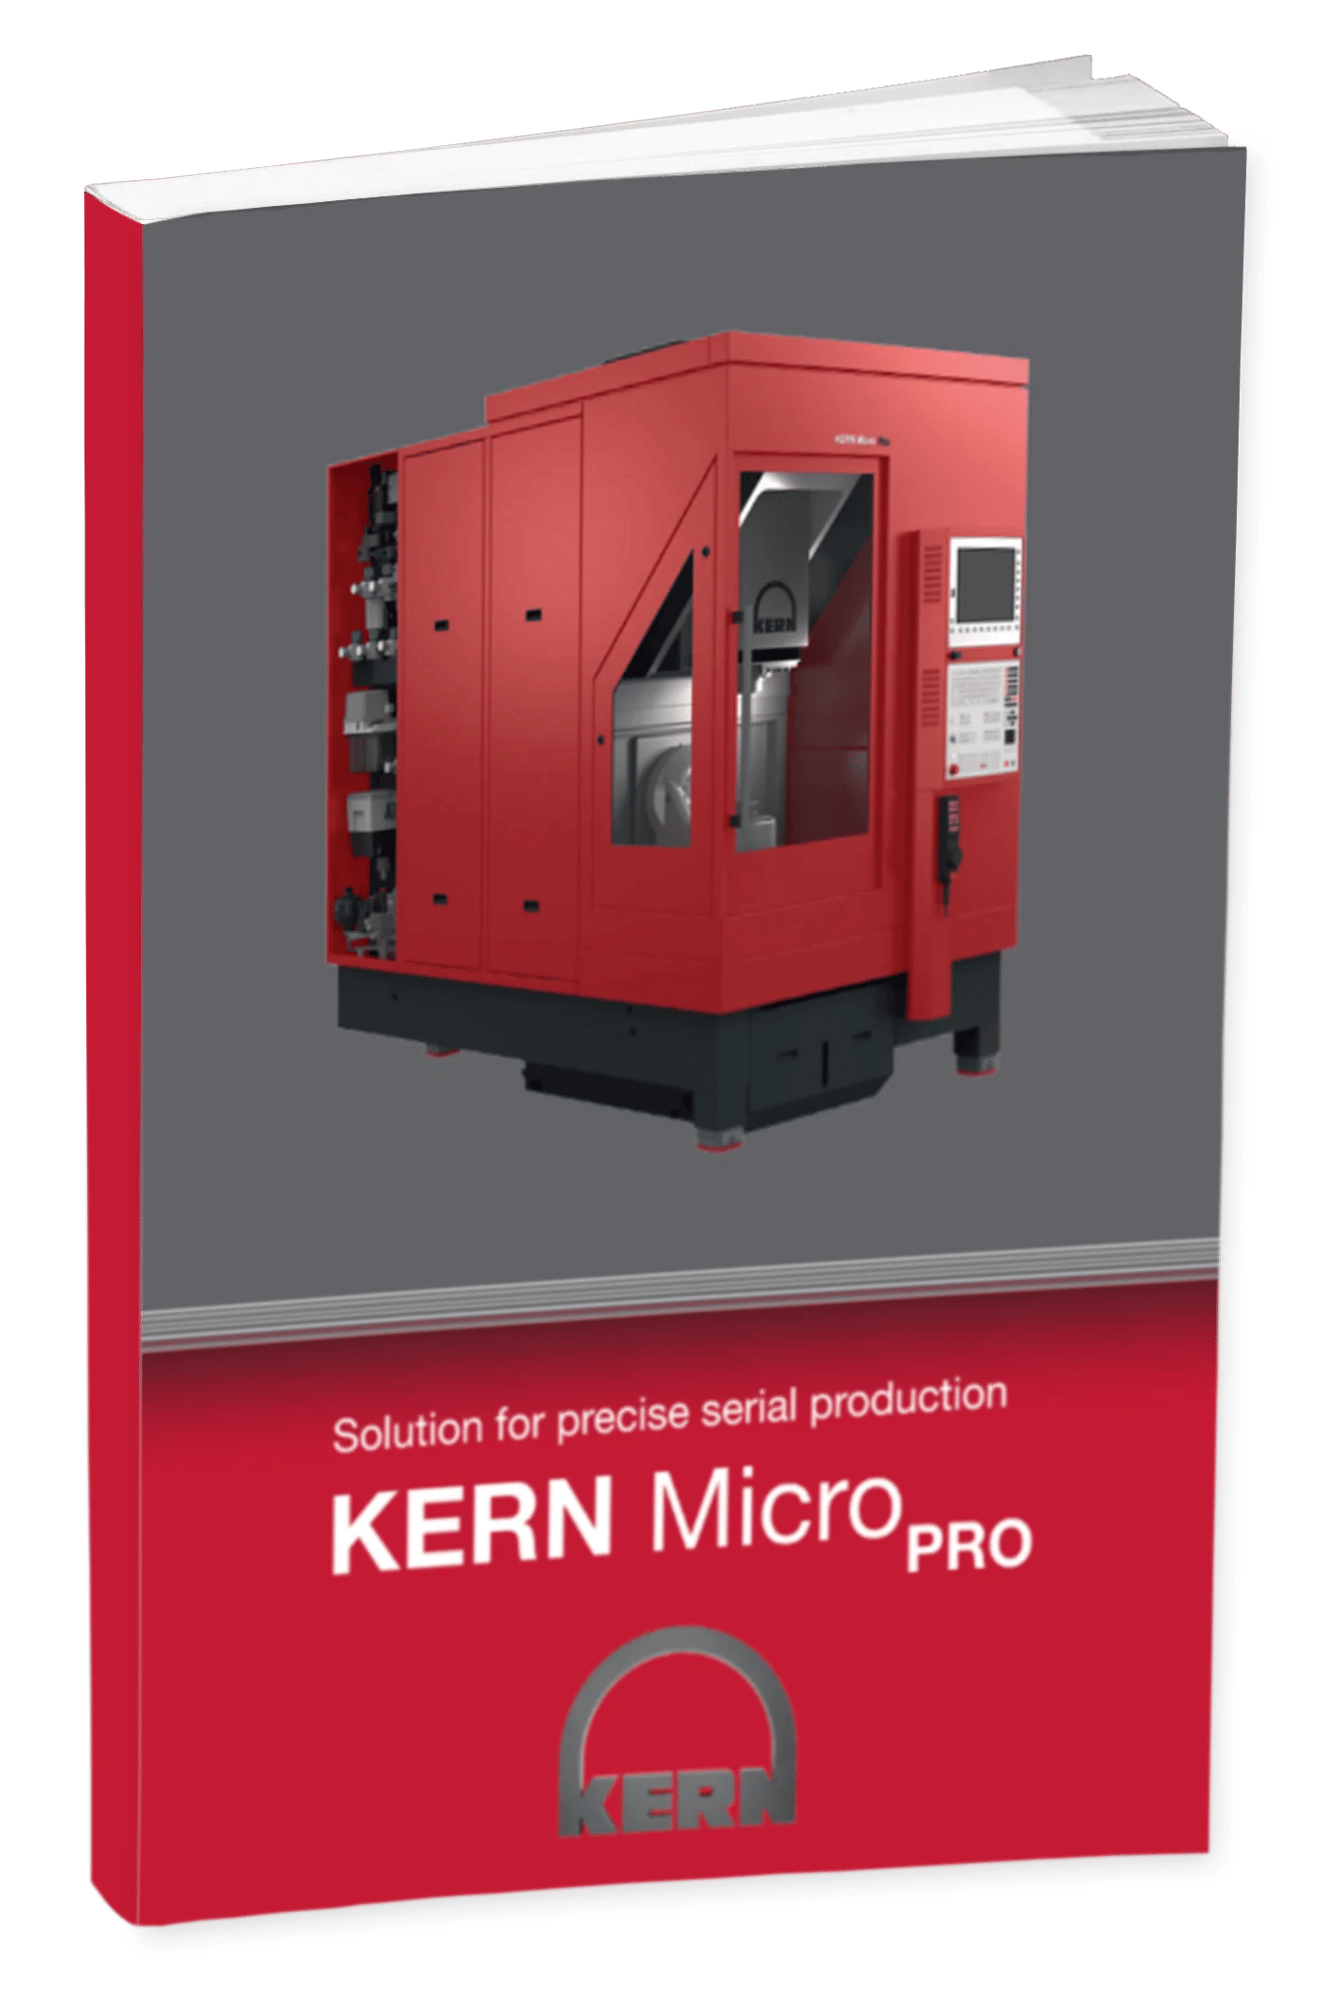 3. KERN Micro Pro Brochure